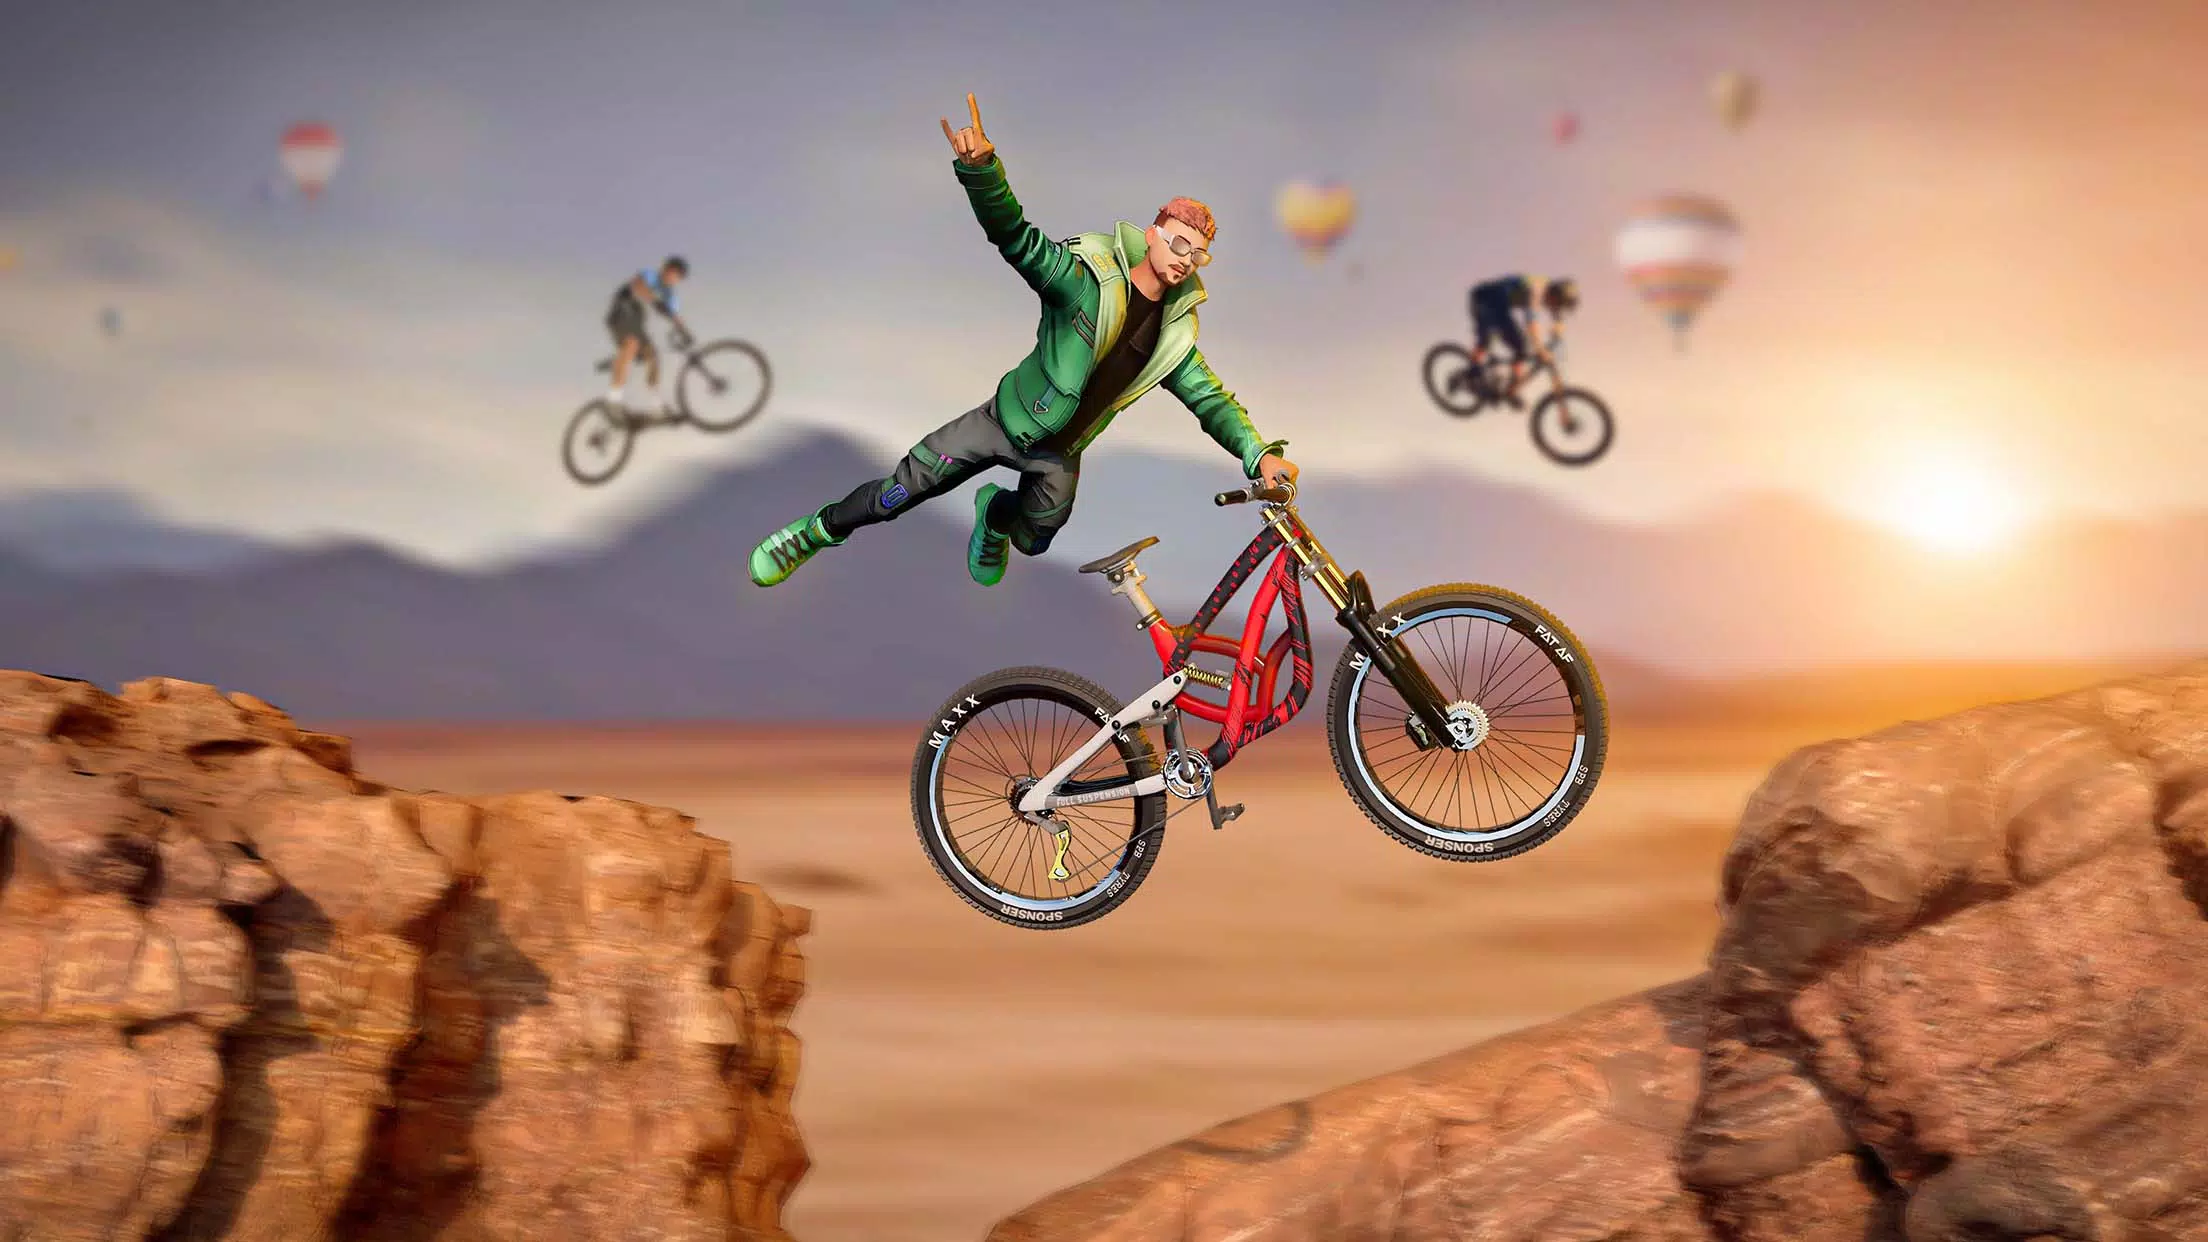 Download do APK de jogo de acrobaciasde bicicleta para Android